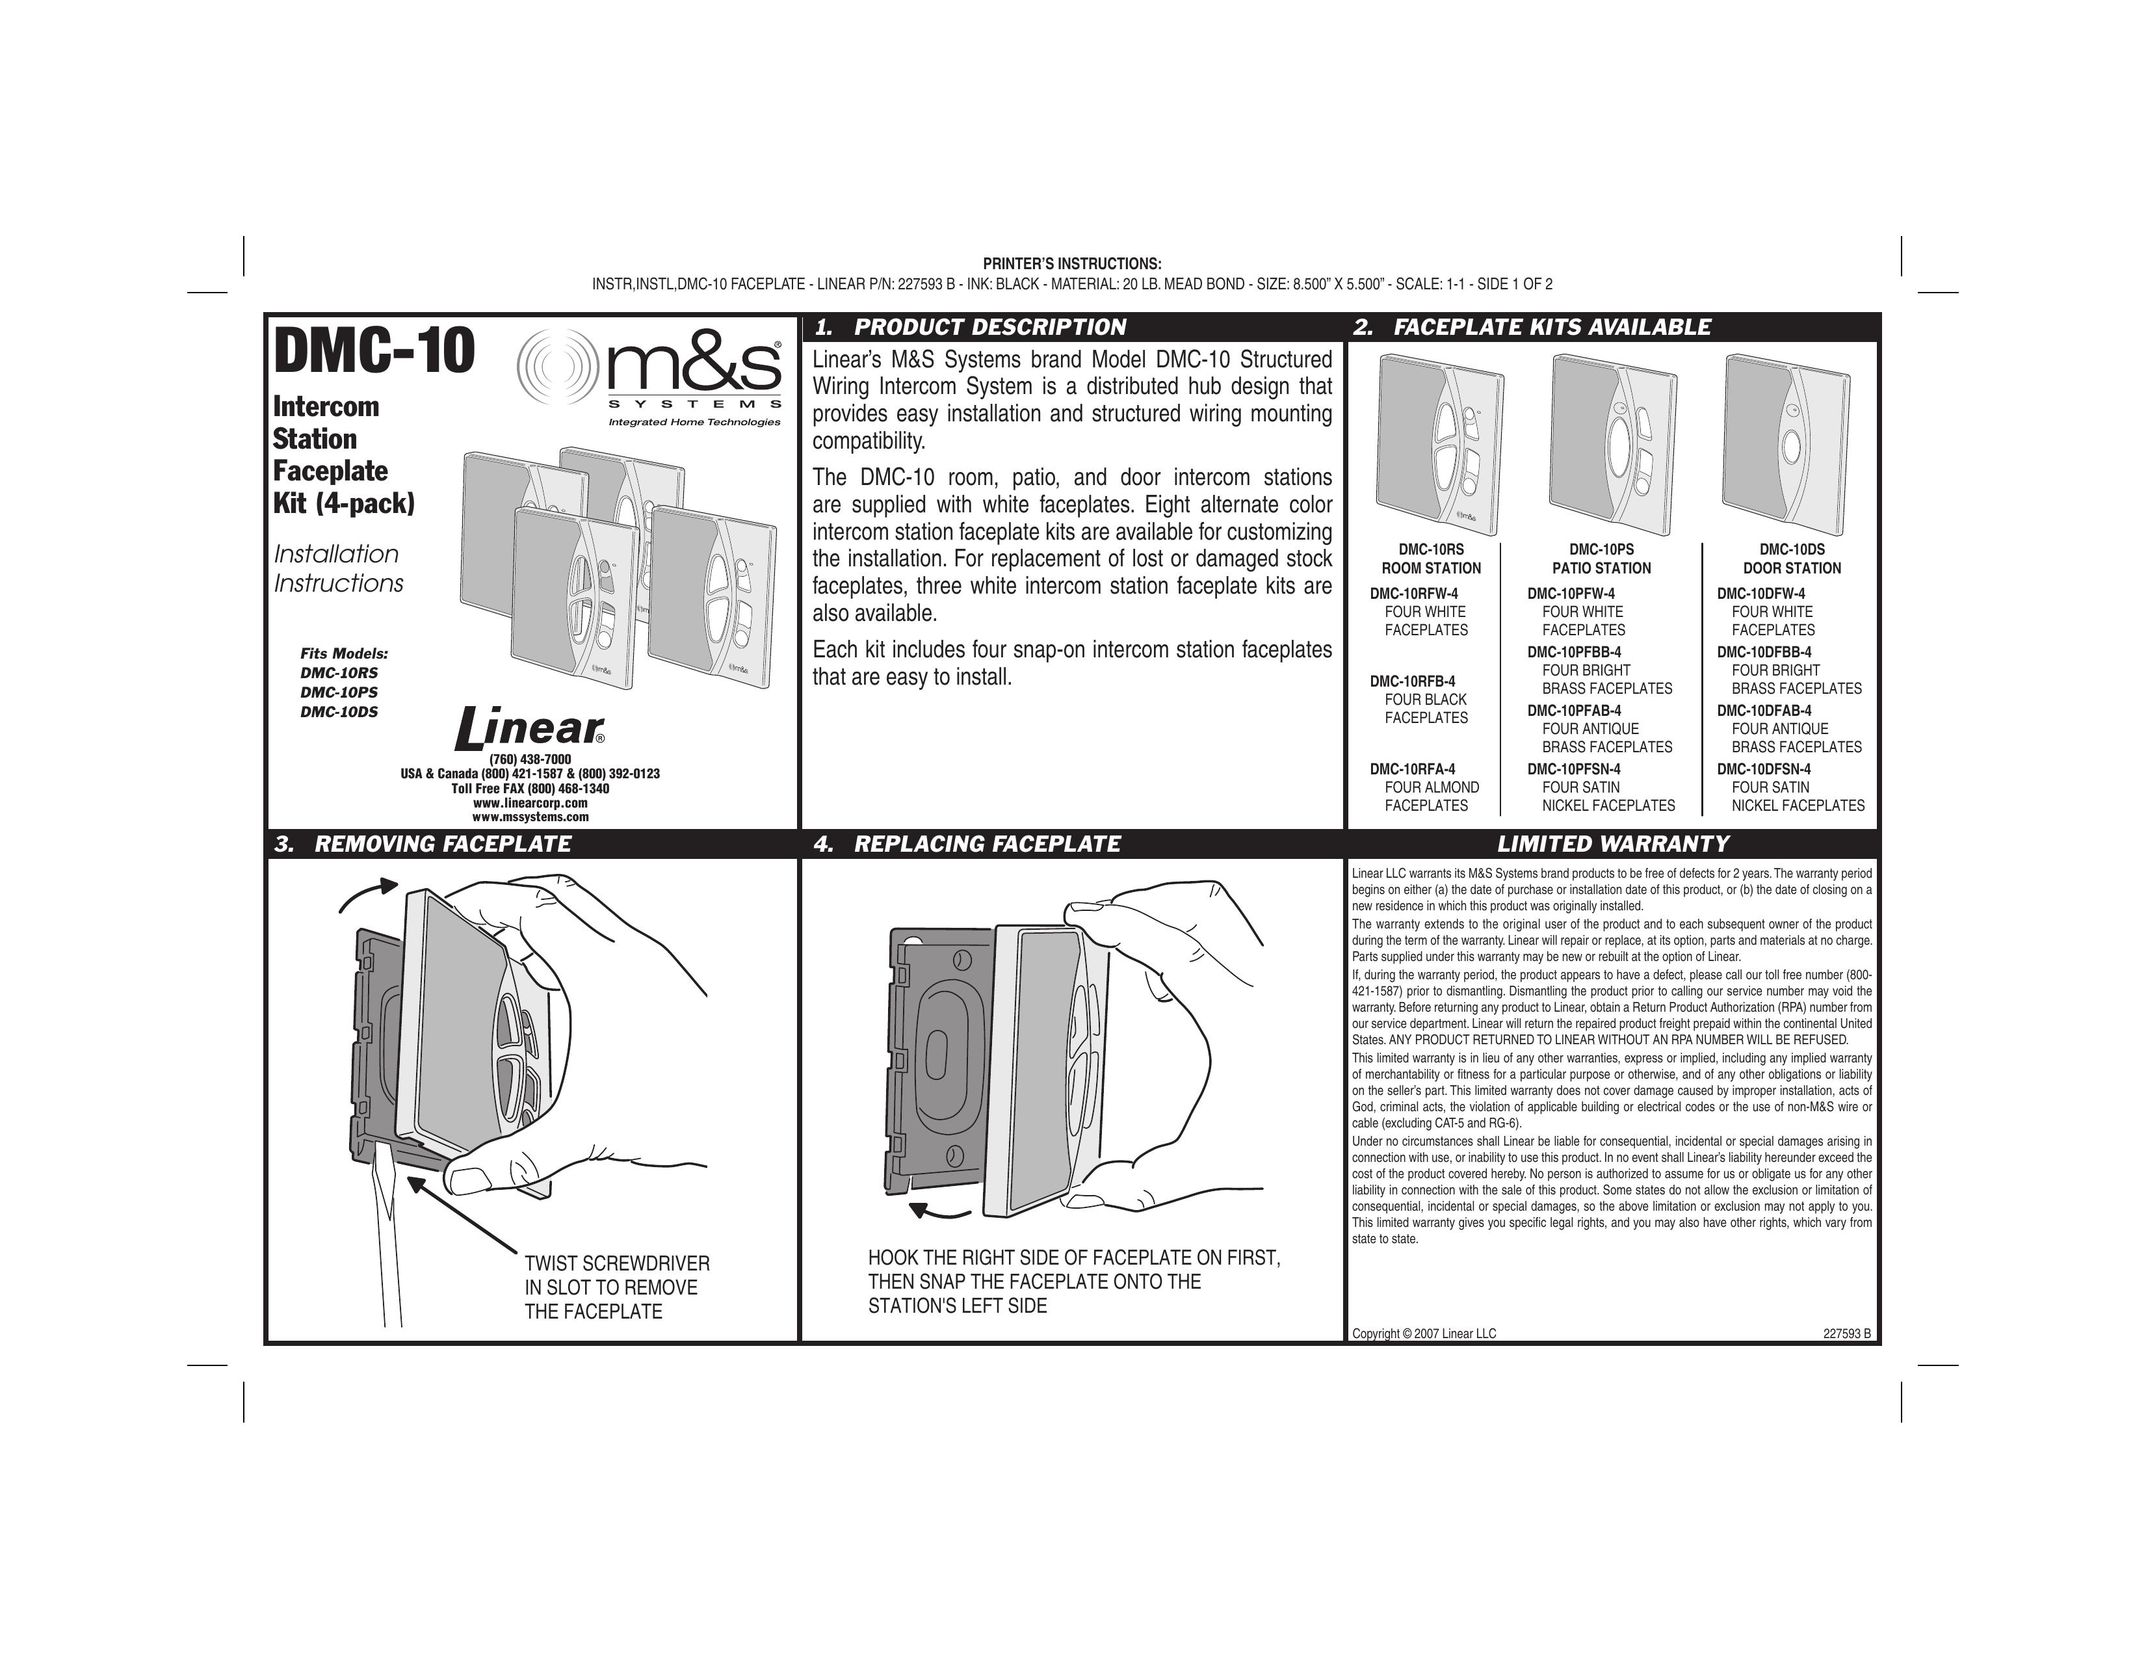 Linear DMC-10 Intercom System User Manual (Page 1)